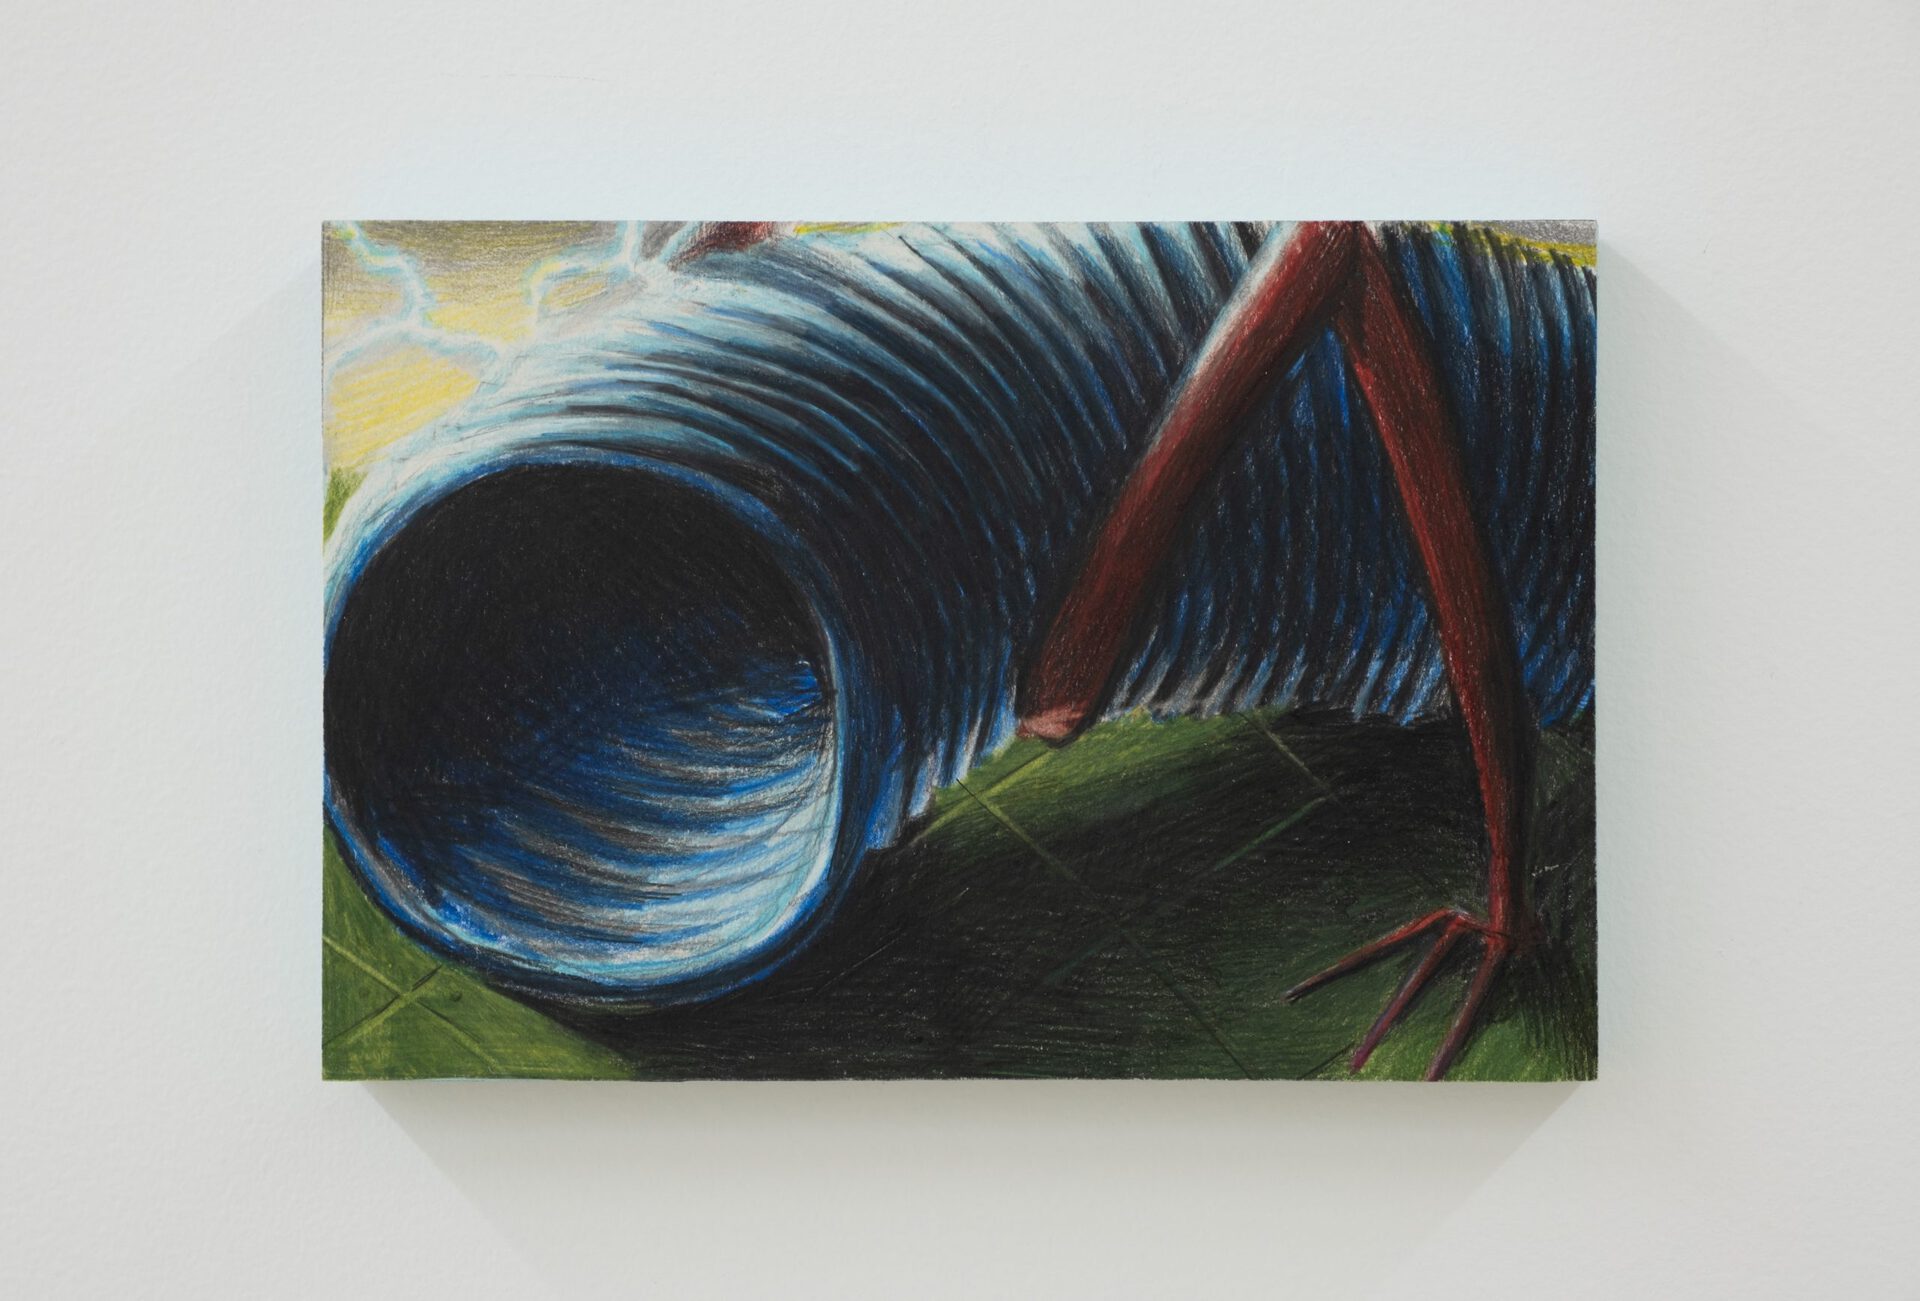 Kian McKeown, Visitor 2, 2021, colored pencil on paper, 9 6/8 x 6 9/16in